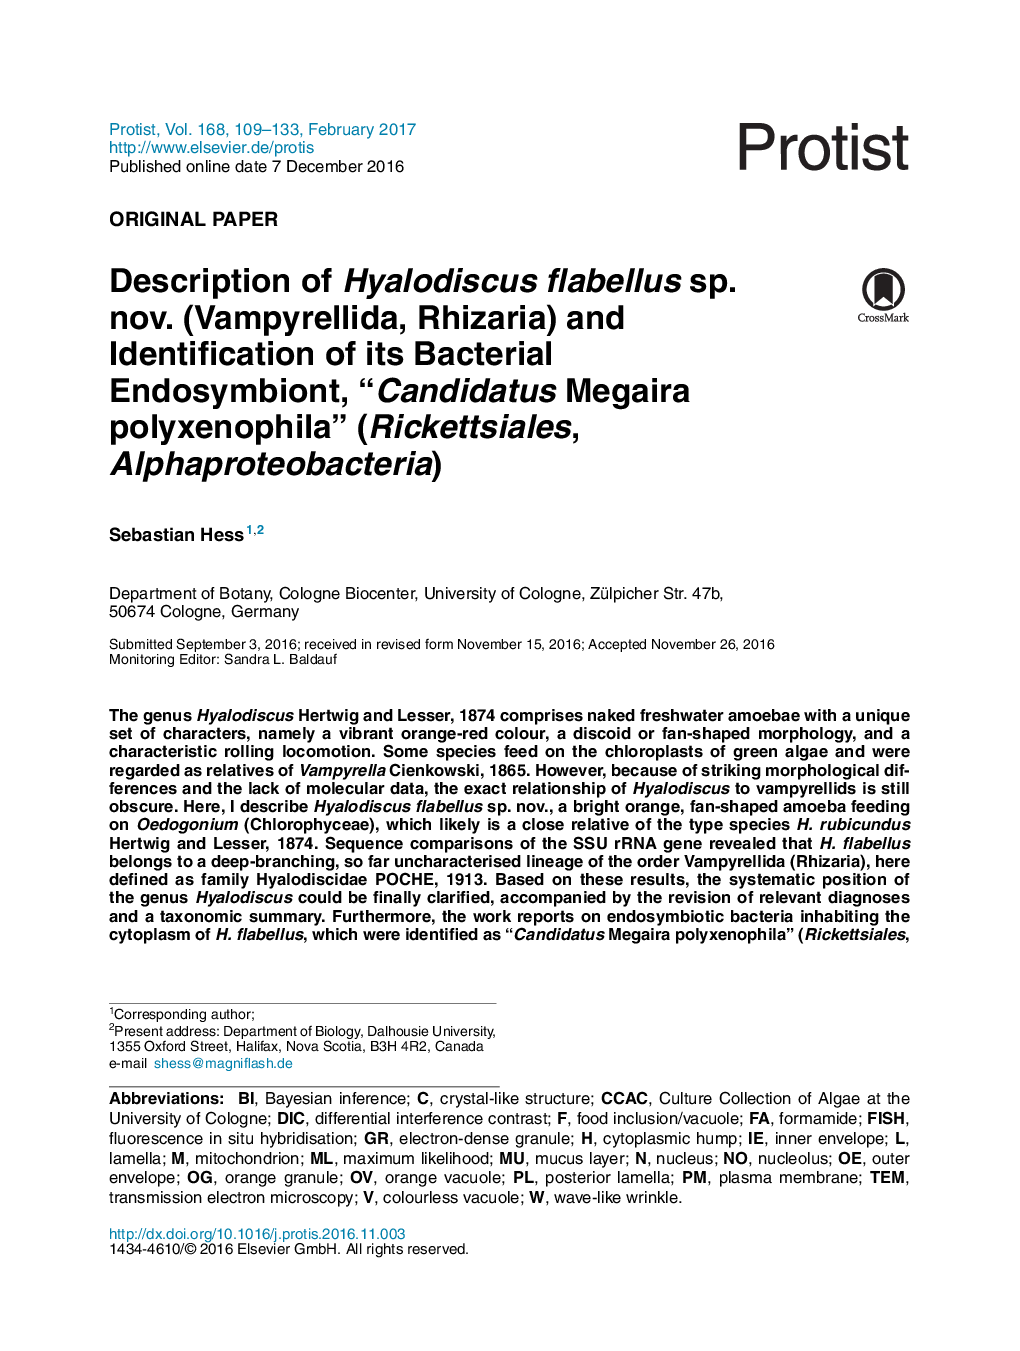 Original PaperDescription of Hyalodiscus flabellus sp. nov. (Vampyrellida, Rhizaria) and Identification of its Bacterial Endosymbiont, “Candidatus Megaira polyxenophila” (Rickettsiales, Alphaproteobacteria)